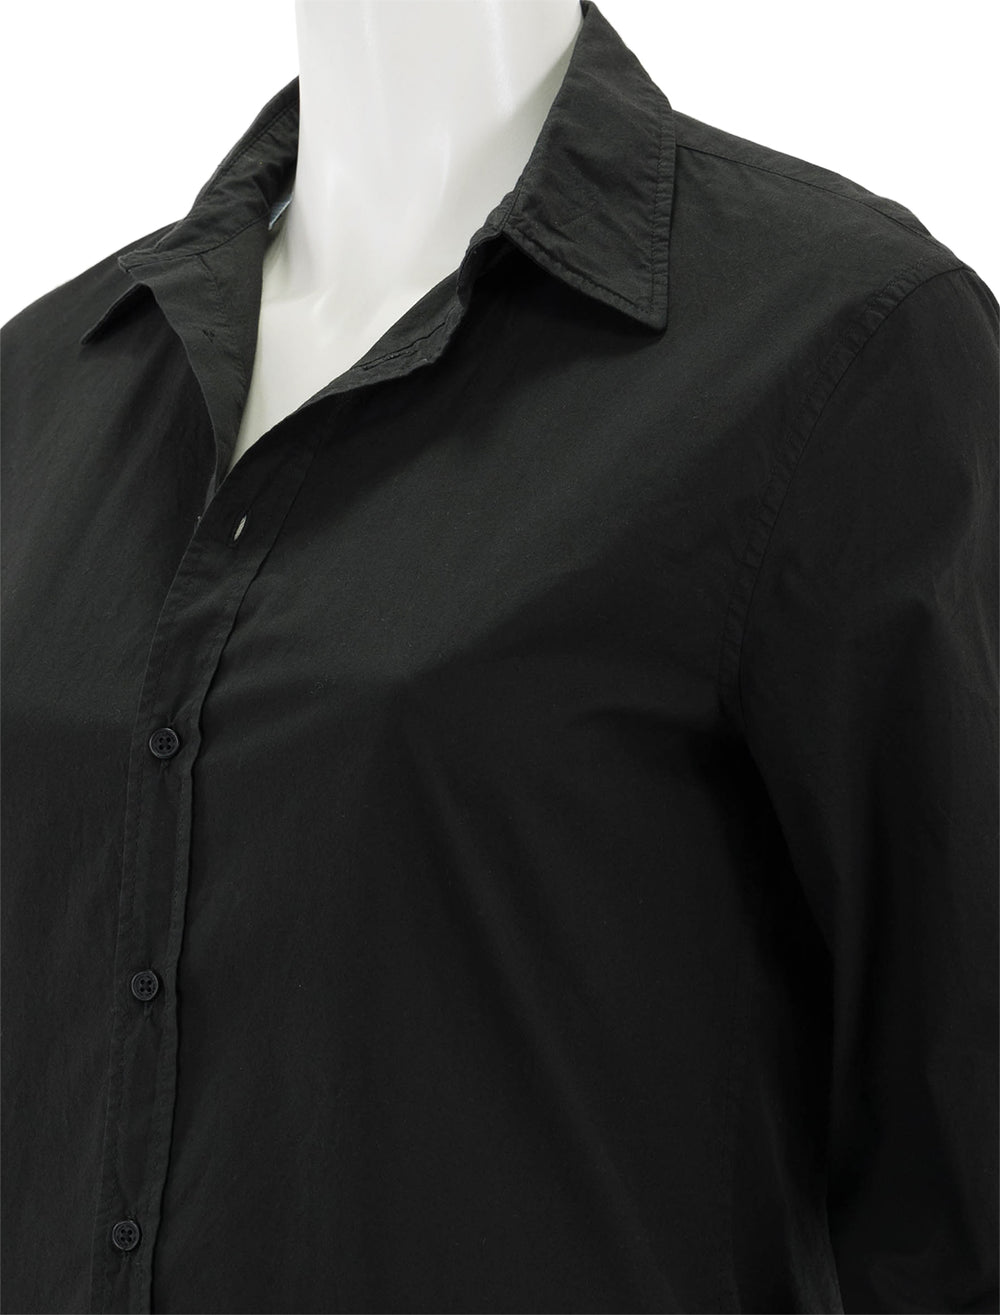 Close-up view of Nili Lotan's raphael classic shirt in black.